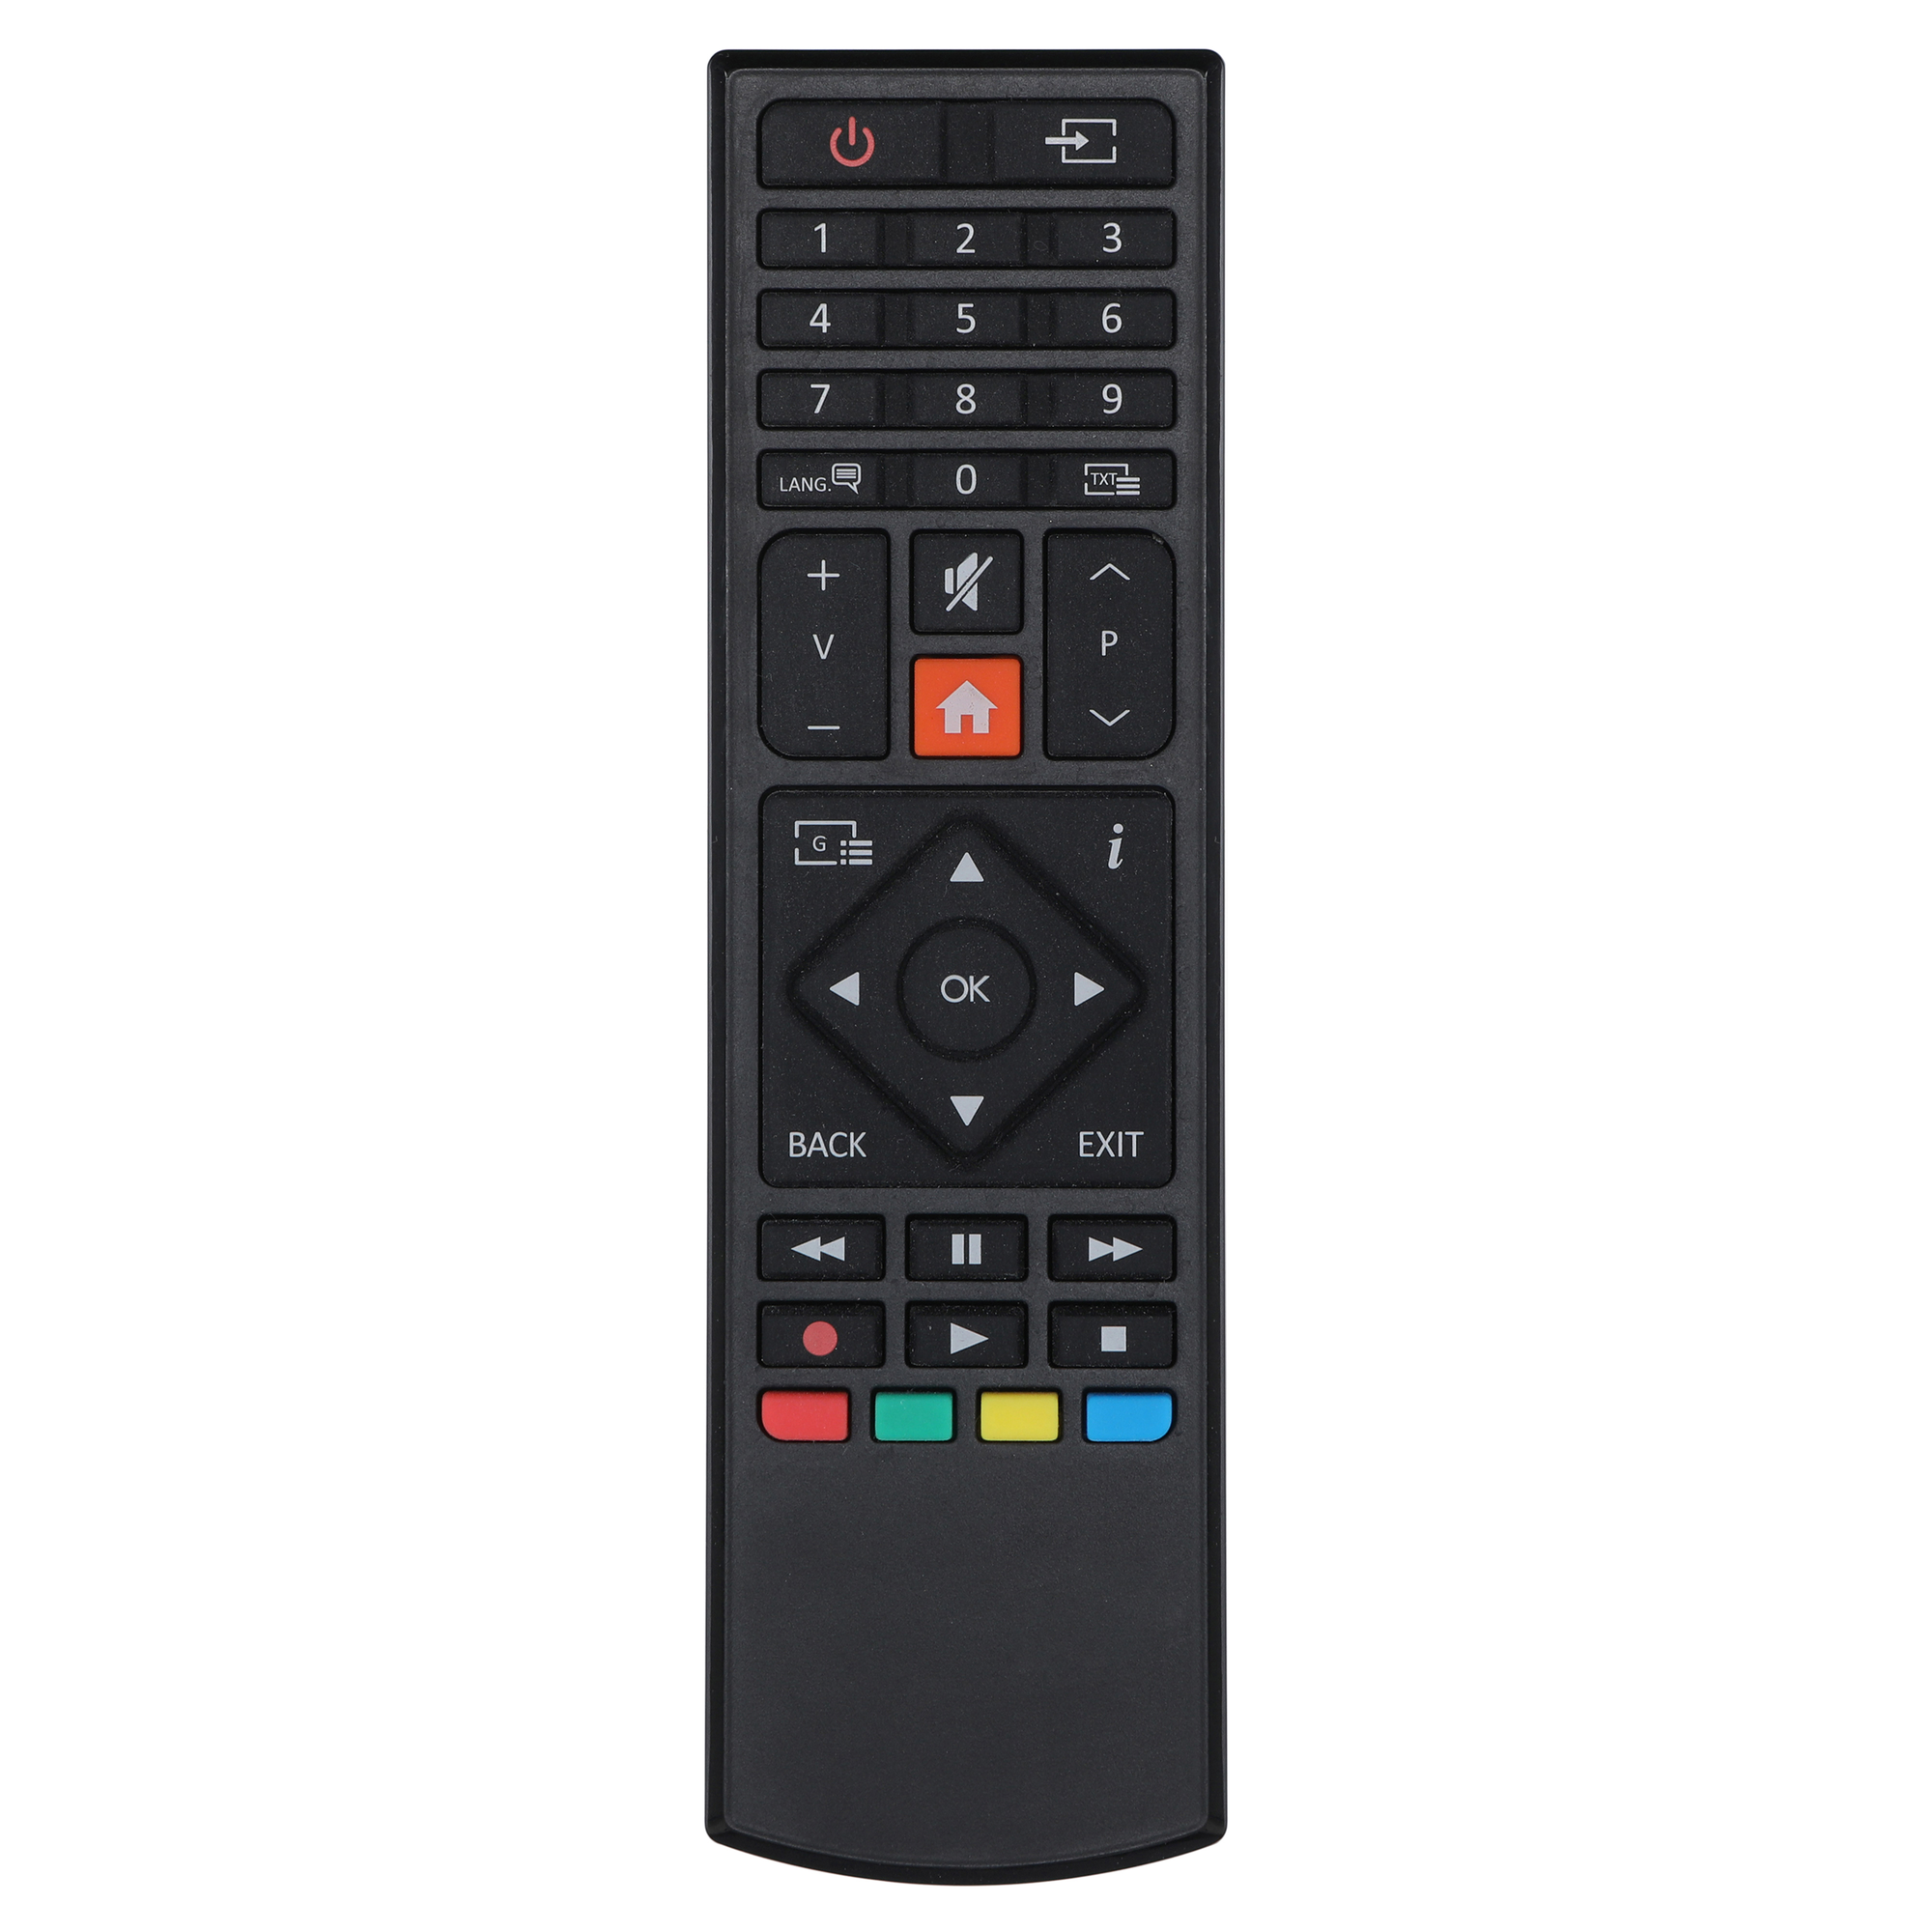 LENCO LED-2423BK (Flat, 24 cm, / Zoll 61 LED HD) TV